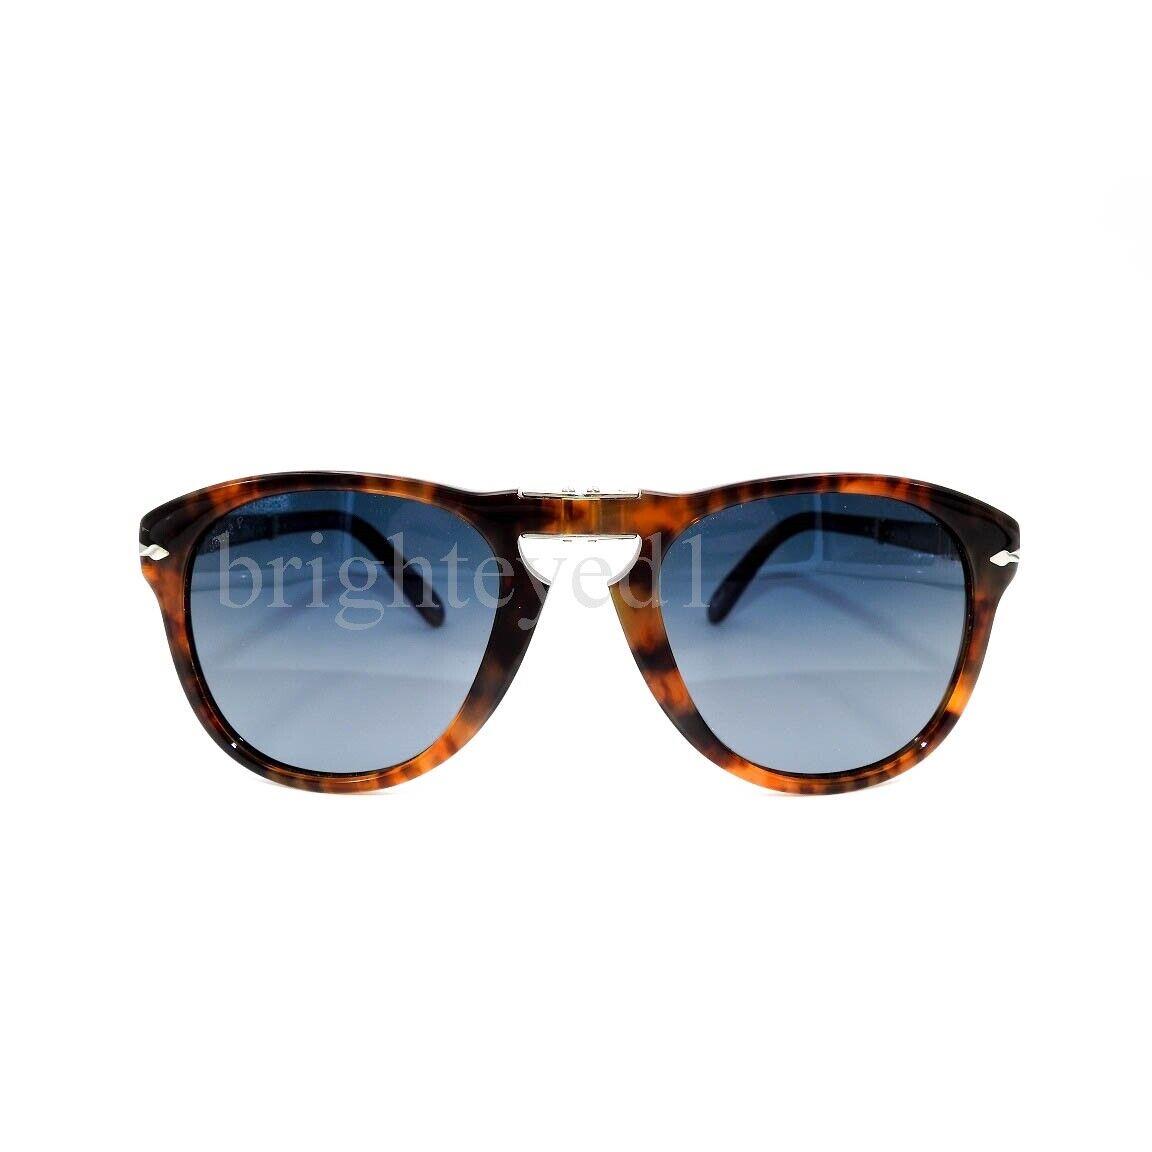 Persol Steve Mcqueen Folding Polarized Sunglasses PO714SM - 108/S3 - 54mm - Frame: Brown, Lens: Blue